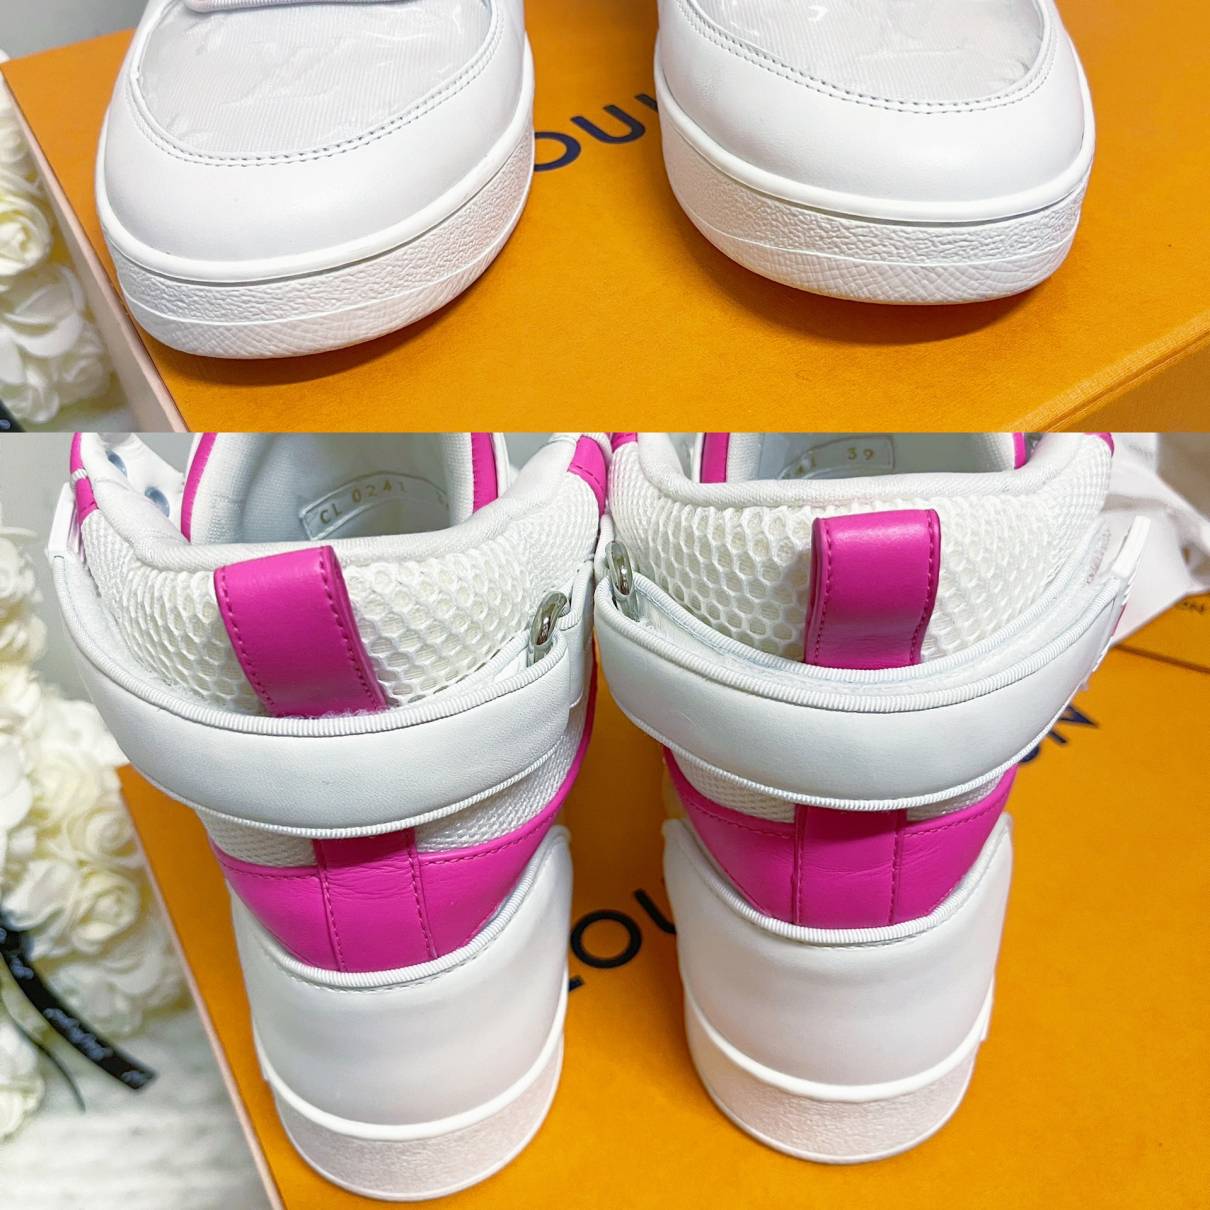 WMNS) LOUIS VUITTON LV Boombox High-top Sport Shoes Pink/White 1A87QX -  KICKS CREW